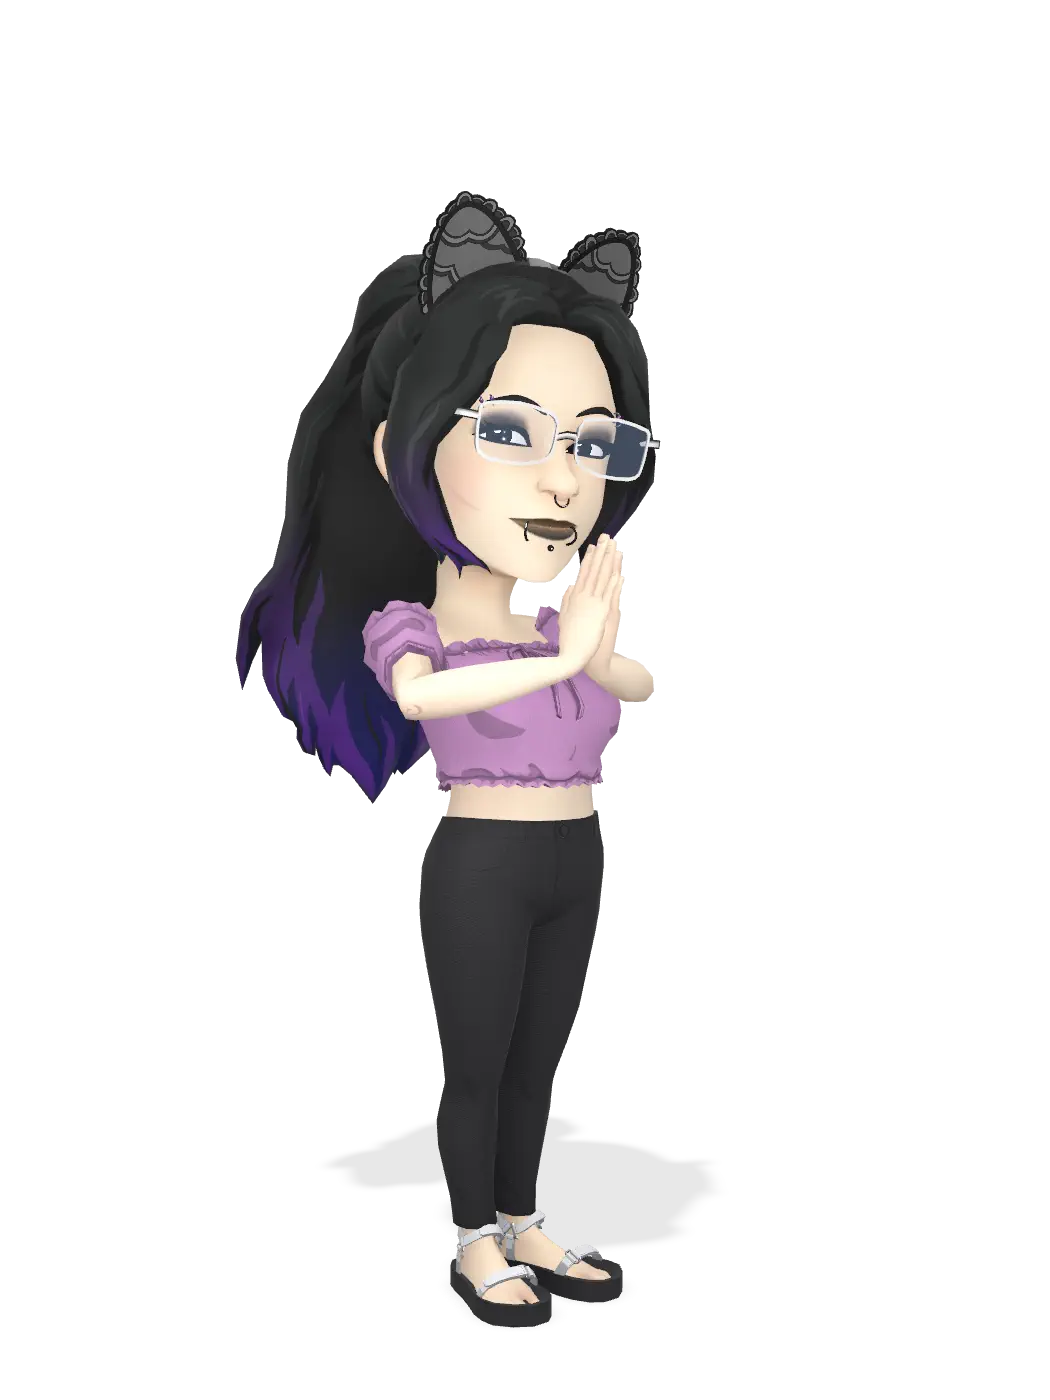 3D Bitmoji for insanedeathgirl avatar